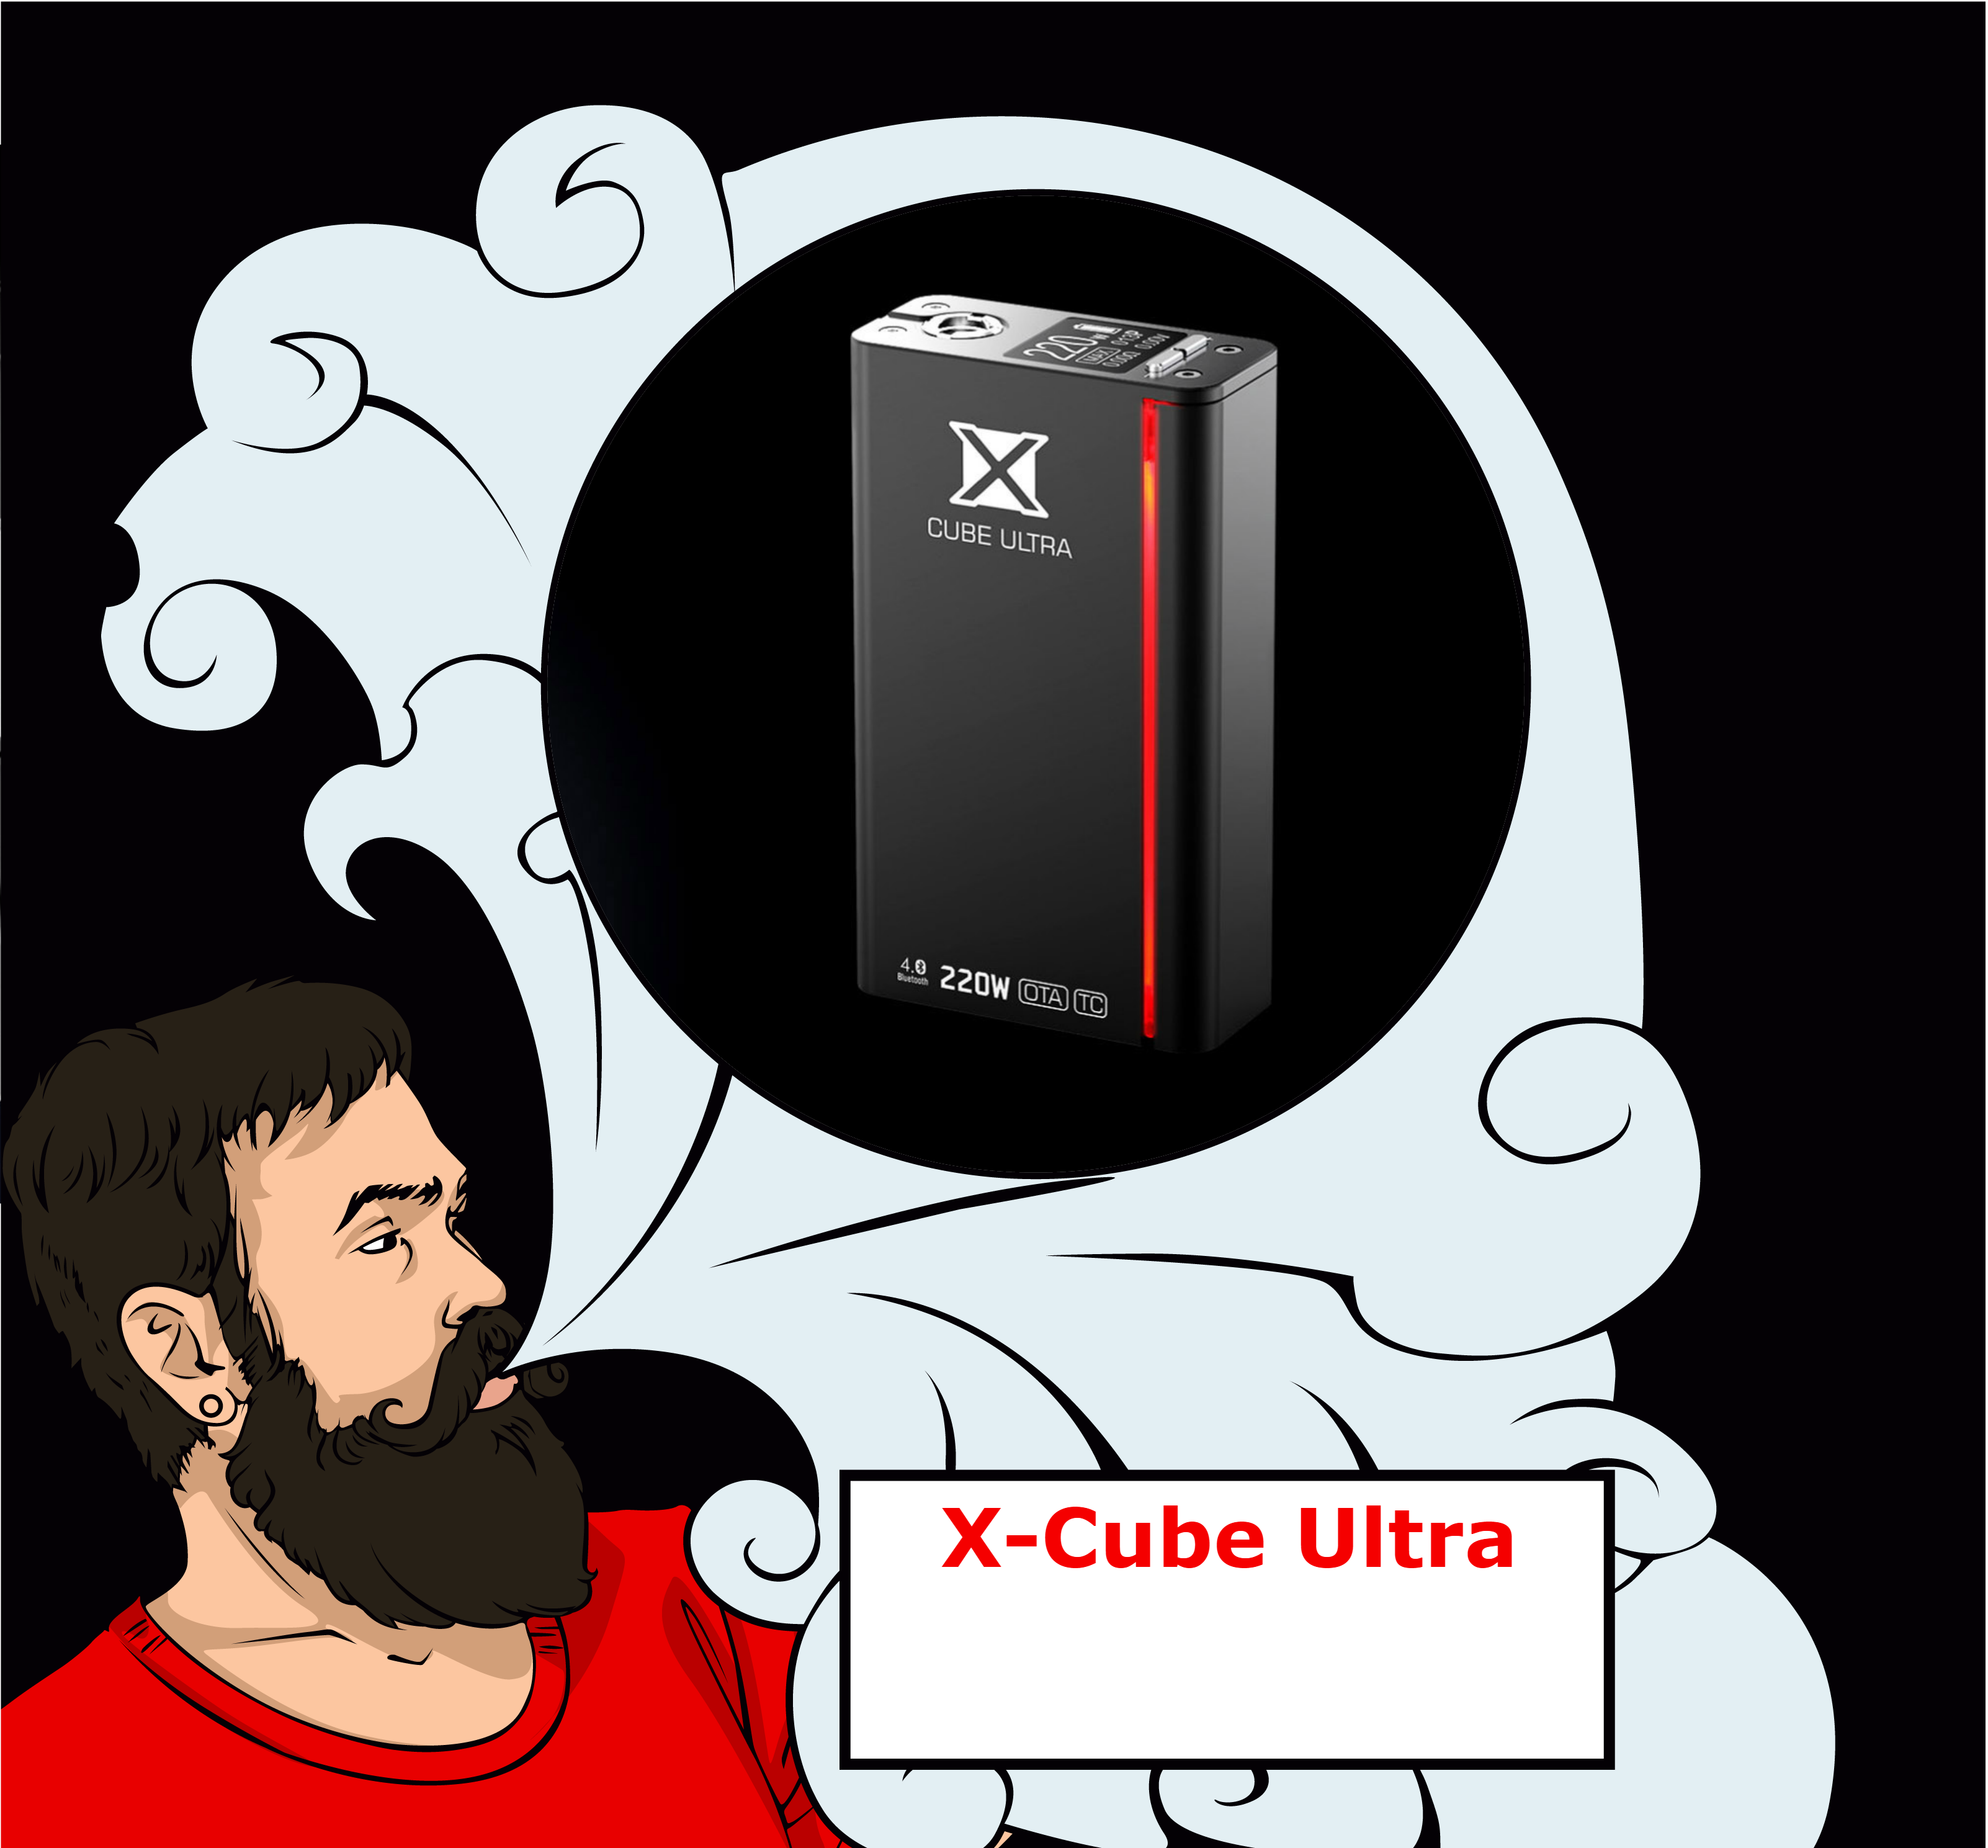 X-Cube Ultra "Вибратор 220"